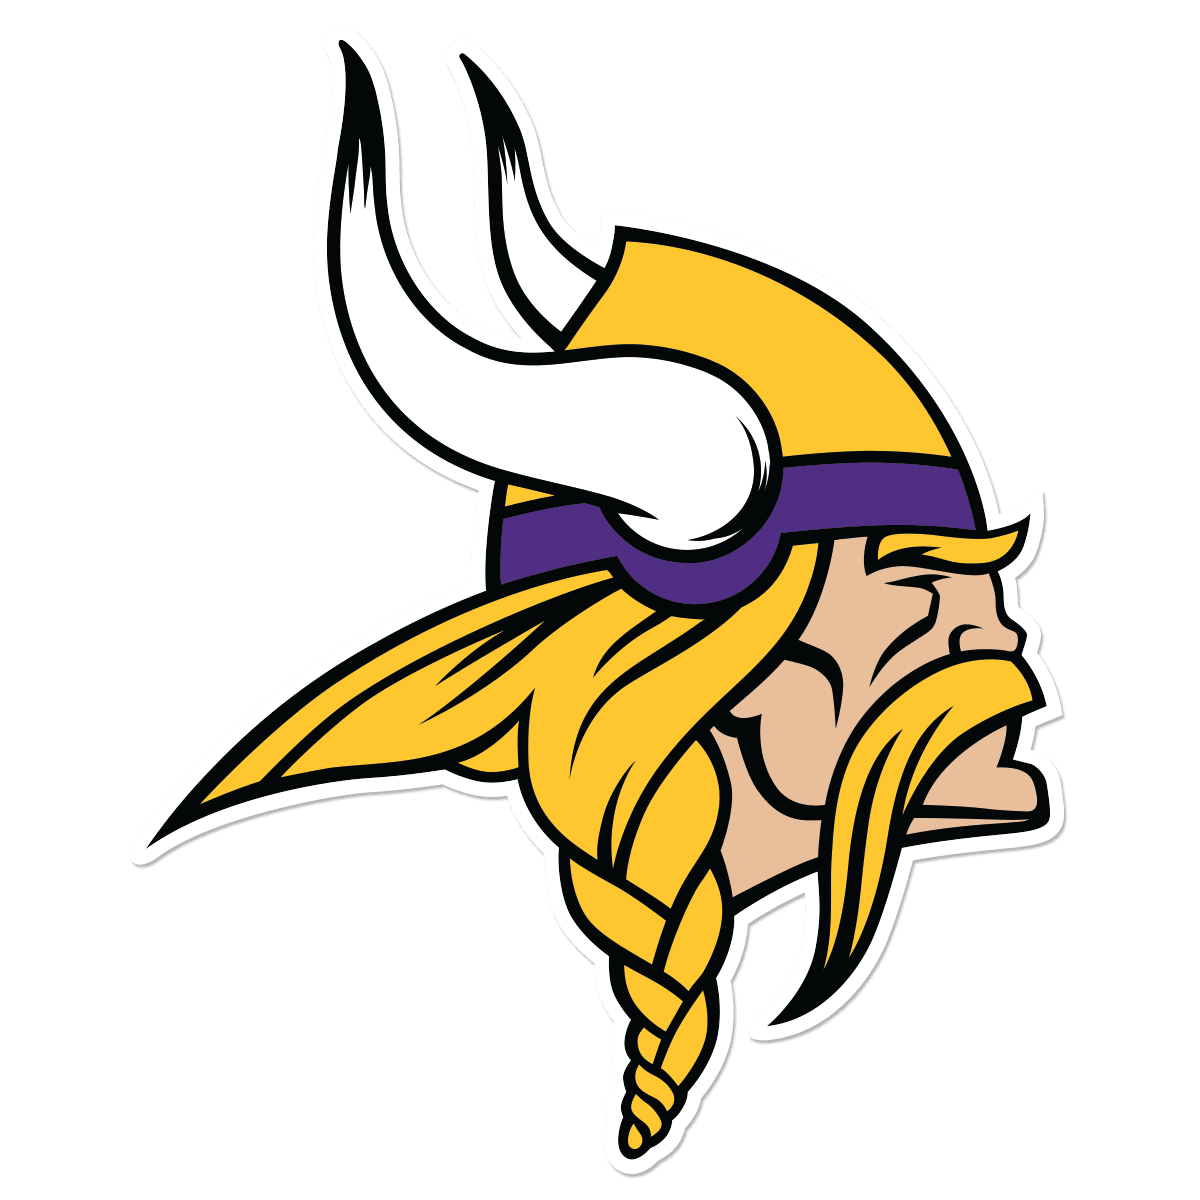 Minnesota Vikings logo.dxf